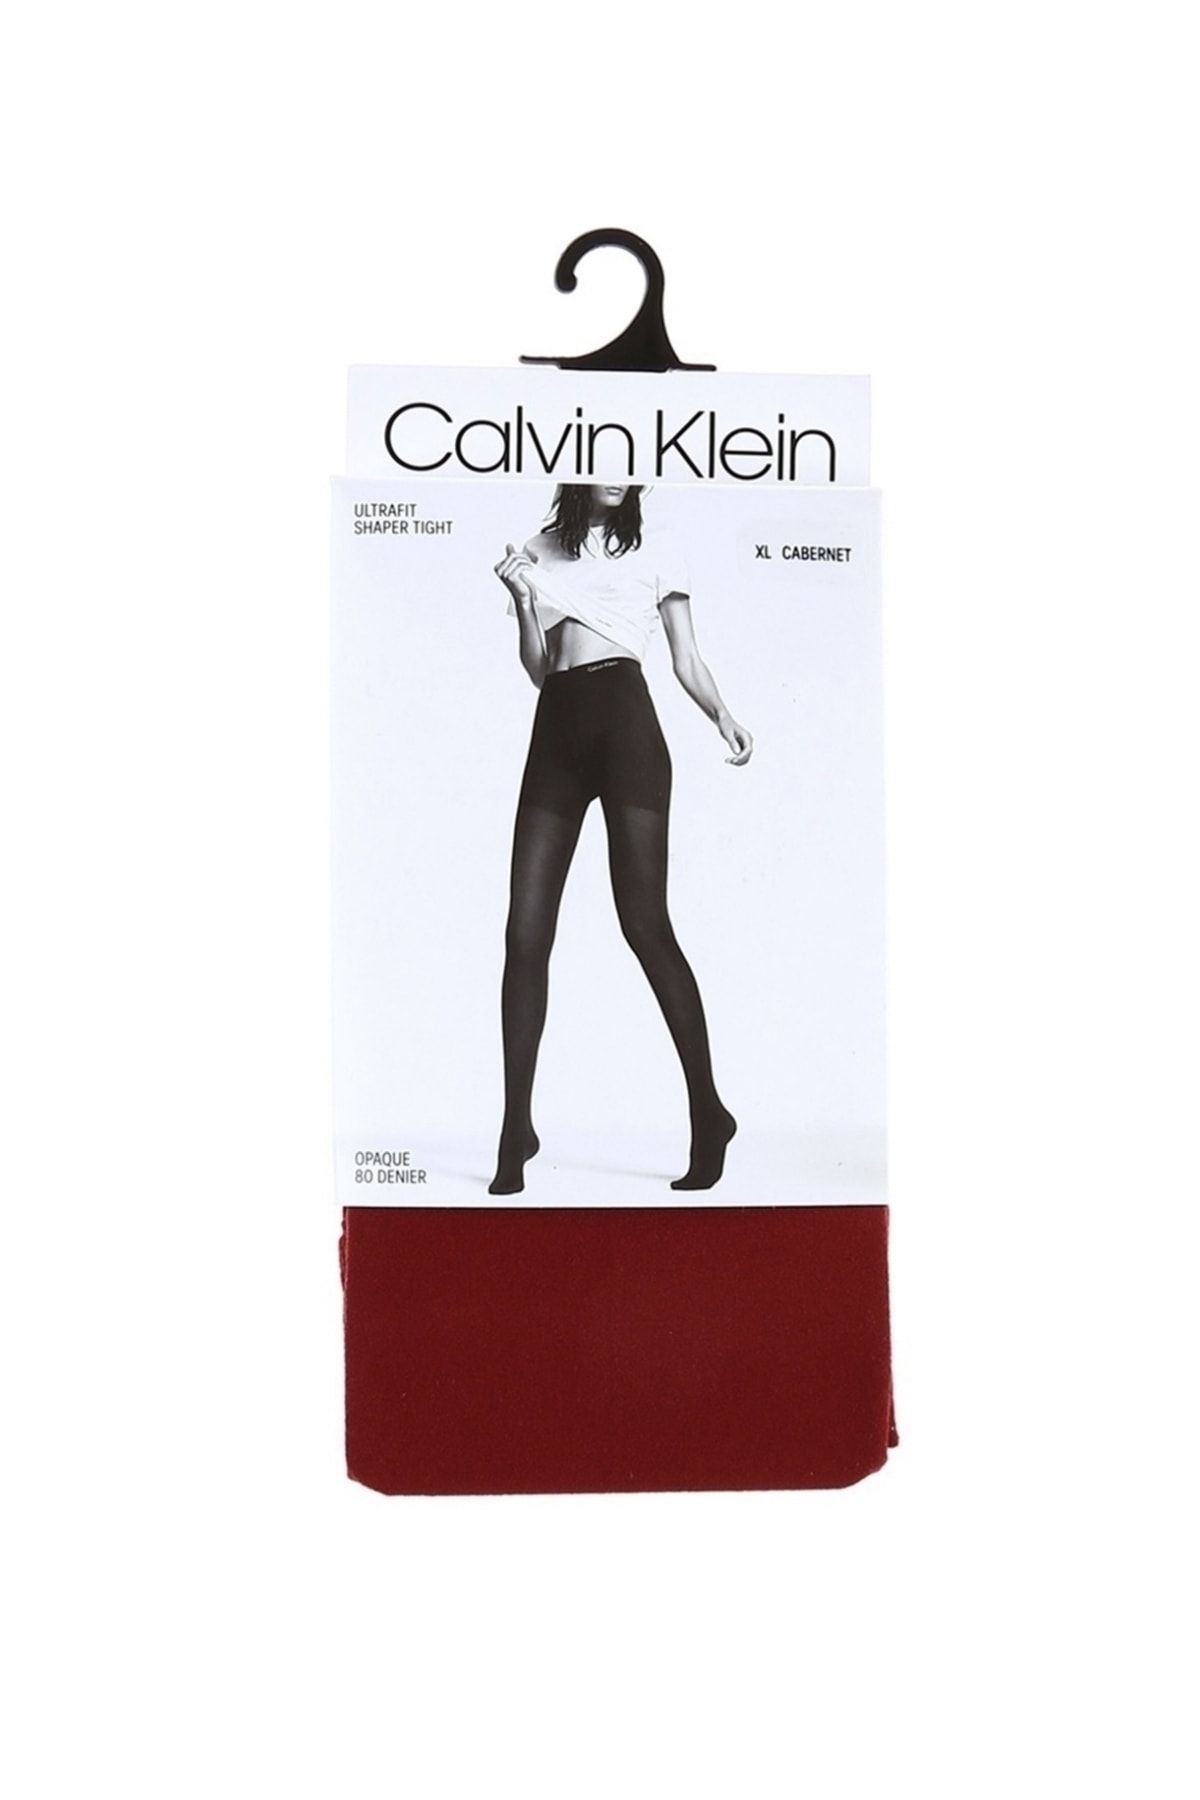 Calvin Klein Ultrafıt shaper tıght cabernet 80 denıer opaque bordo külotlu çorap 80den opak